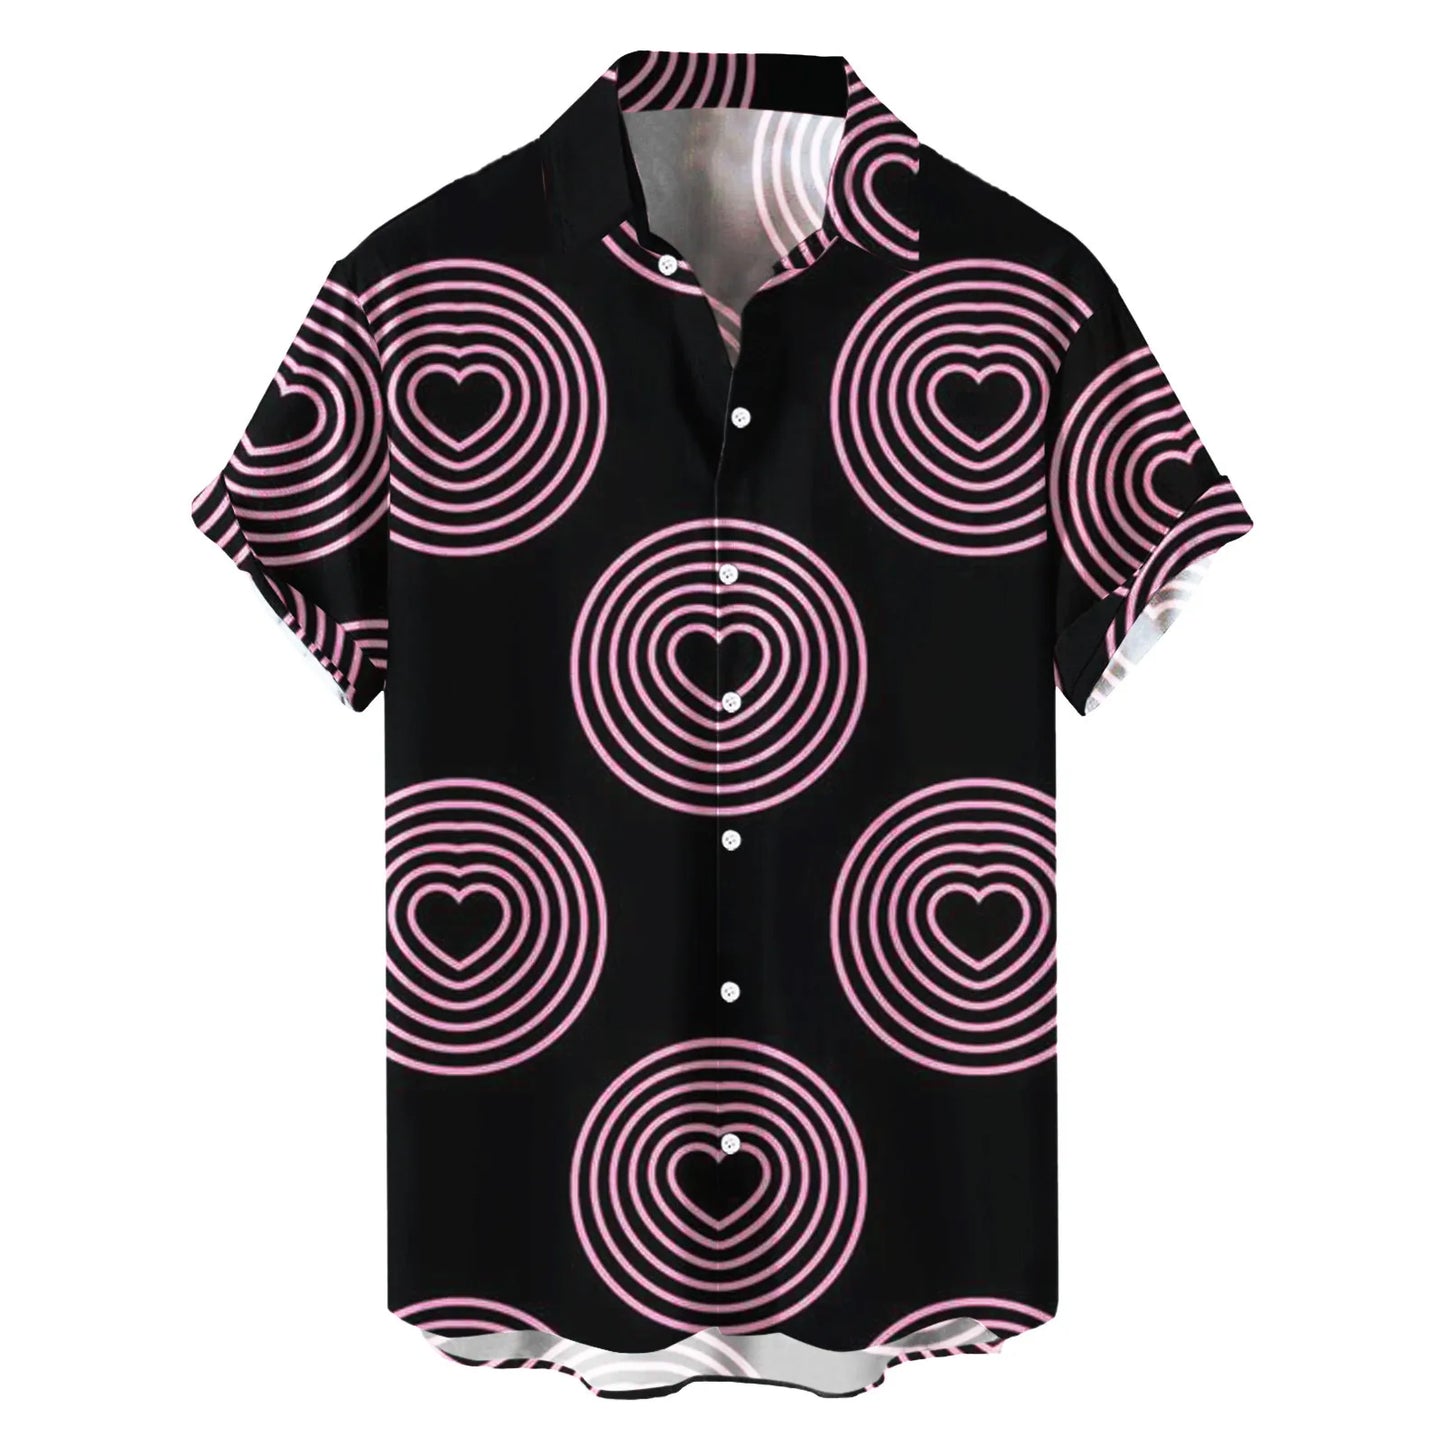 Men's Fashion Shirts Men Casual Button Wide Range of colors